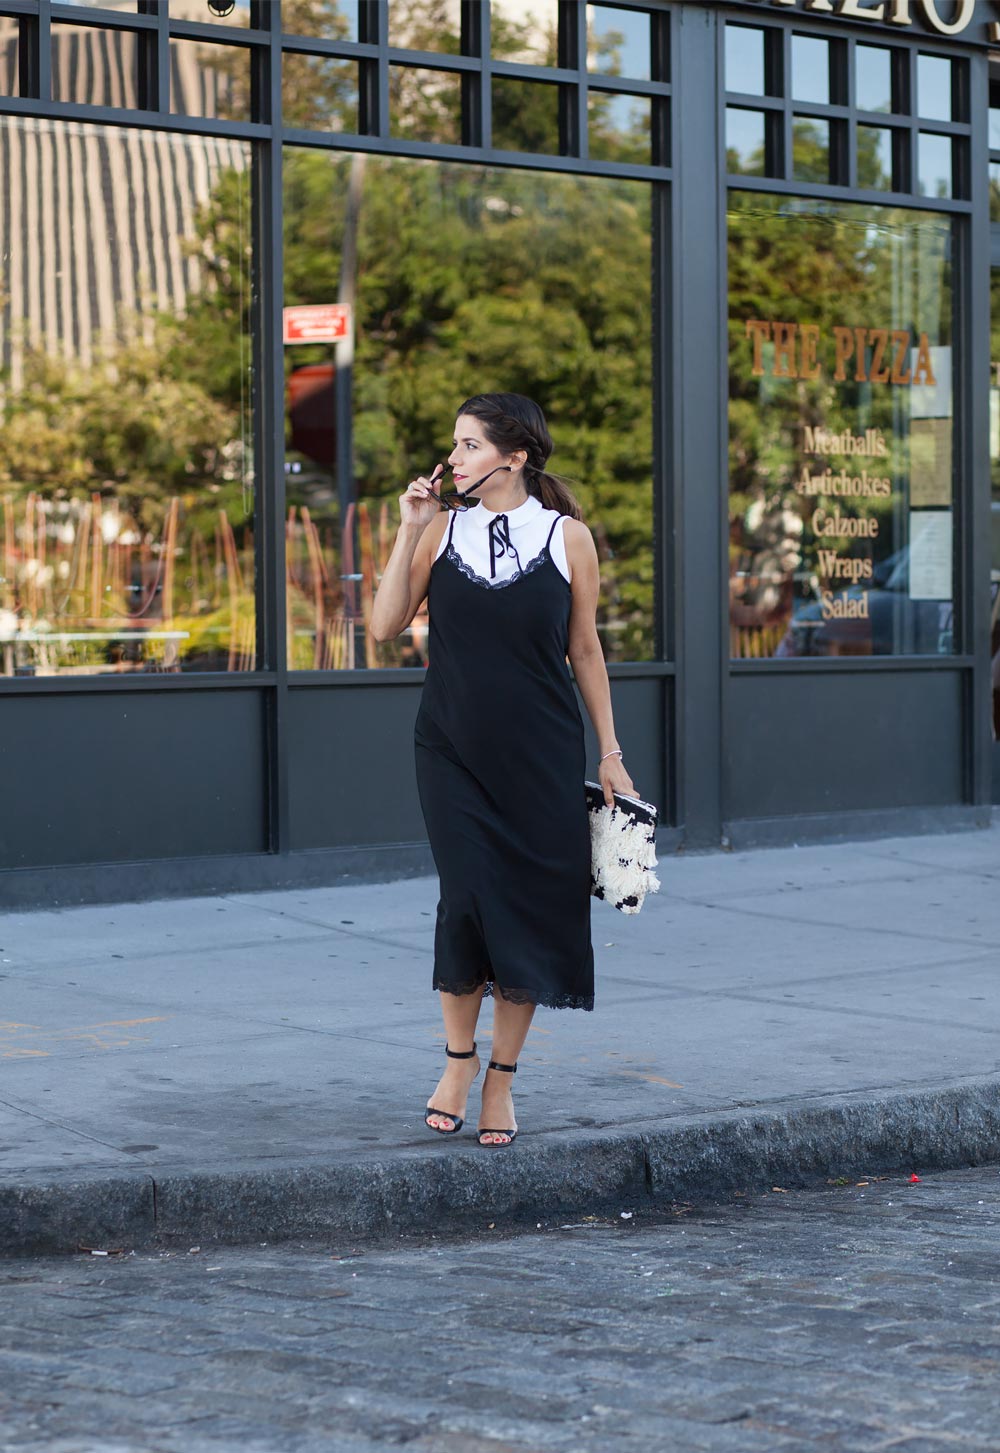 Black Slip Dress Schutz High Heel Sandals Grey Blazer Chloe Drew Bag Cardigan Trends How to Wear a Slip Dress NYC New York Fashion Blogger Corporate Catwalk